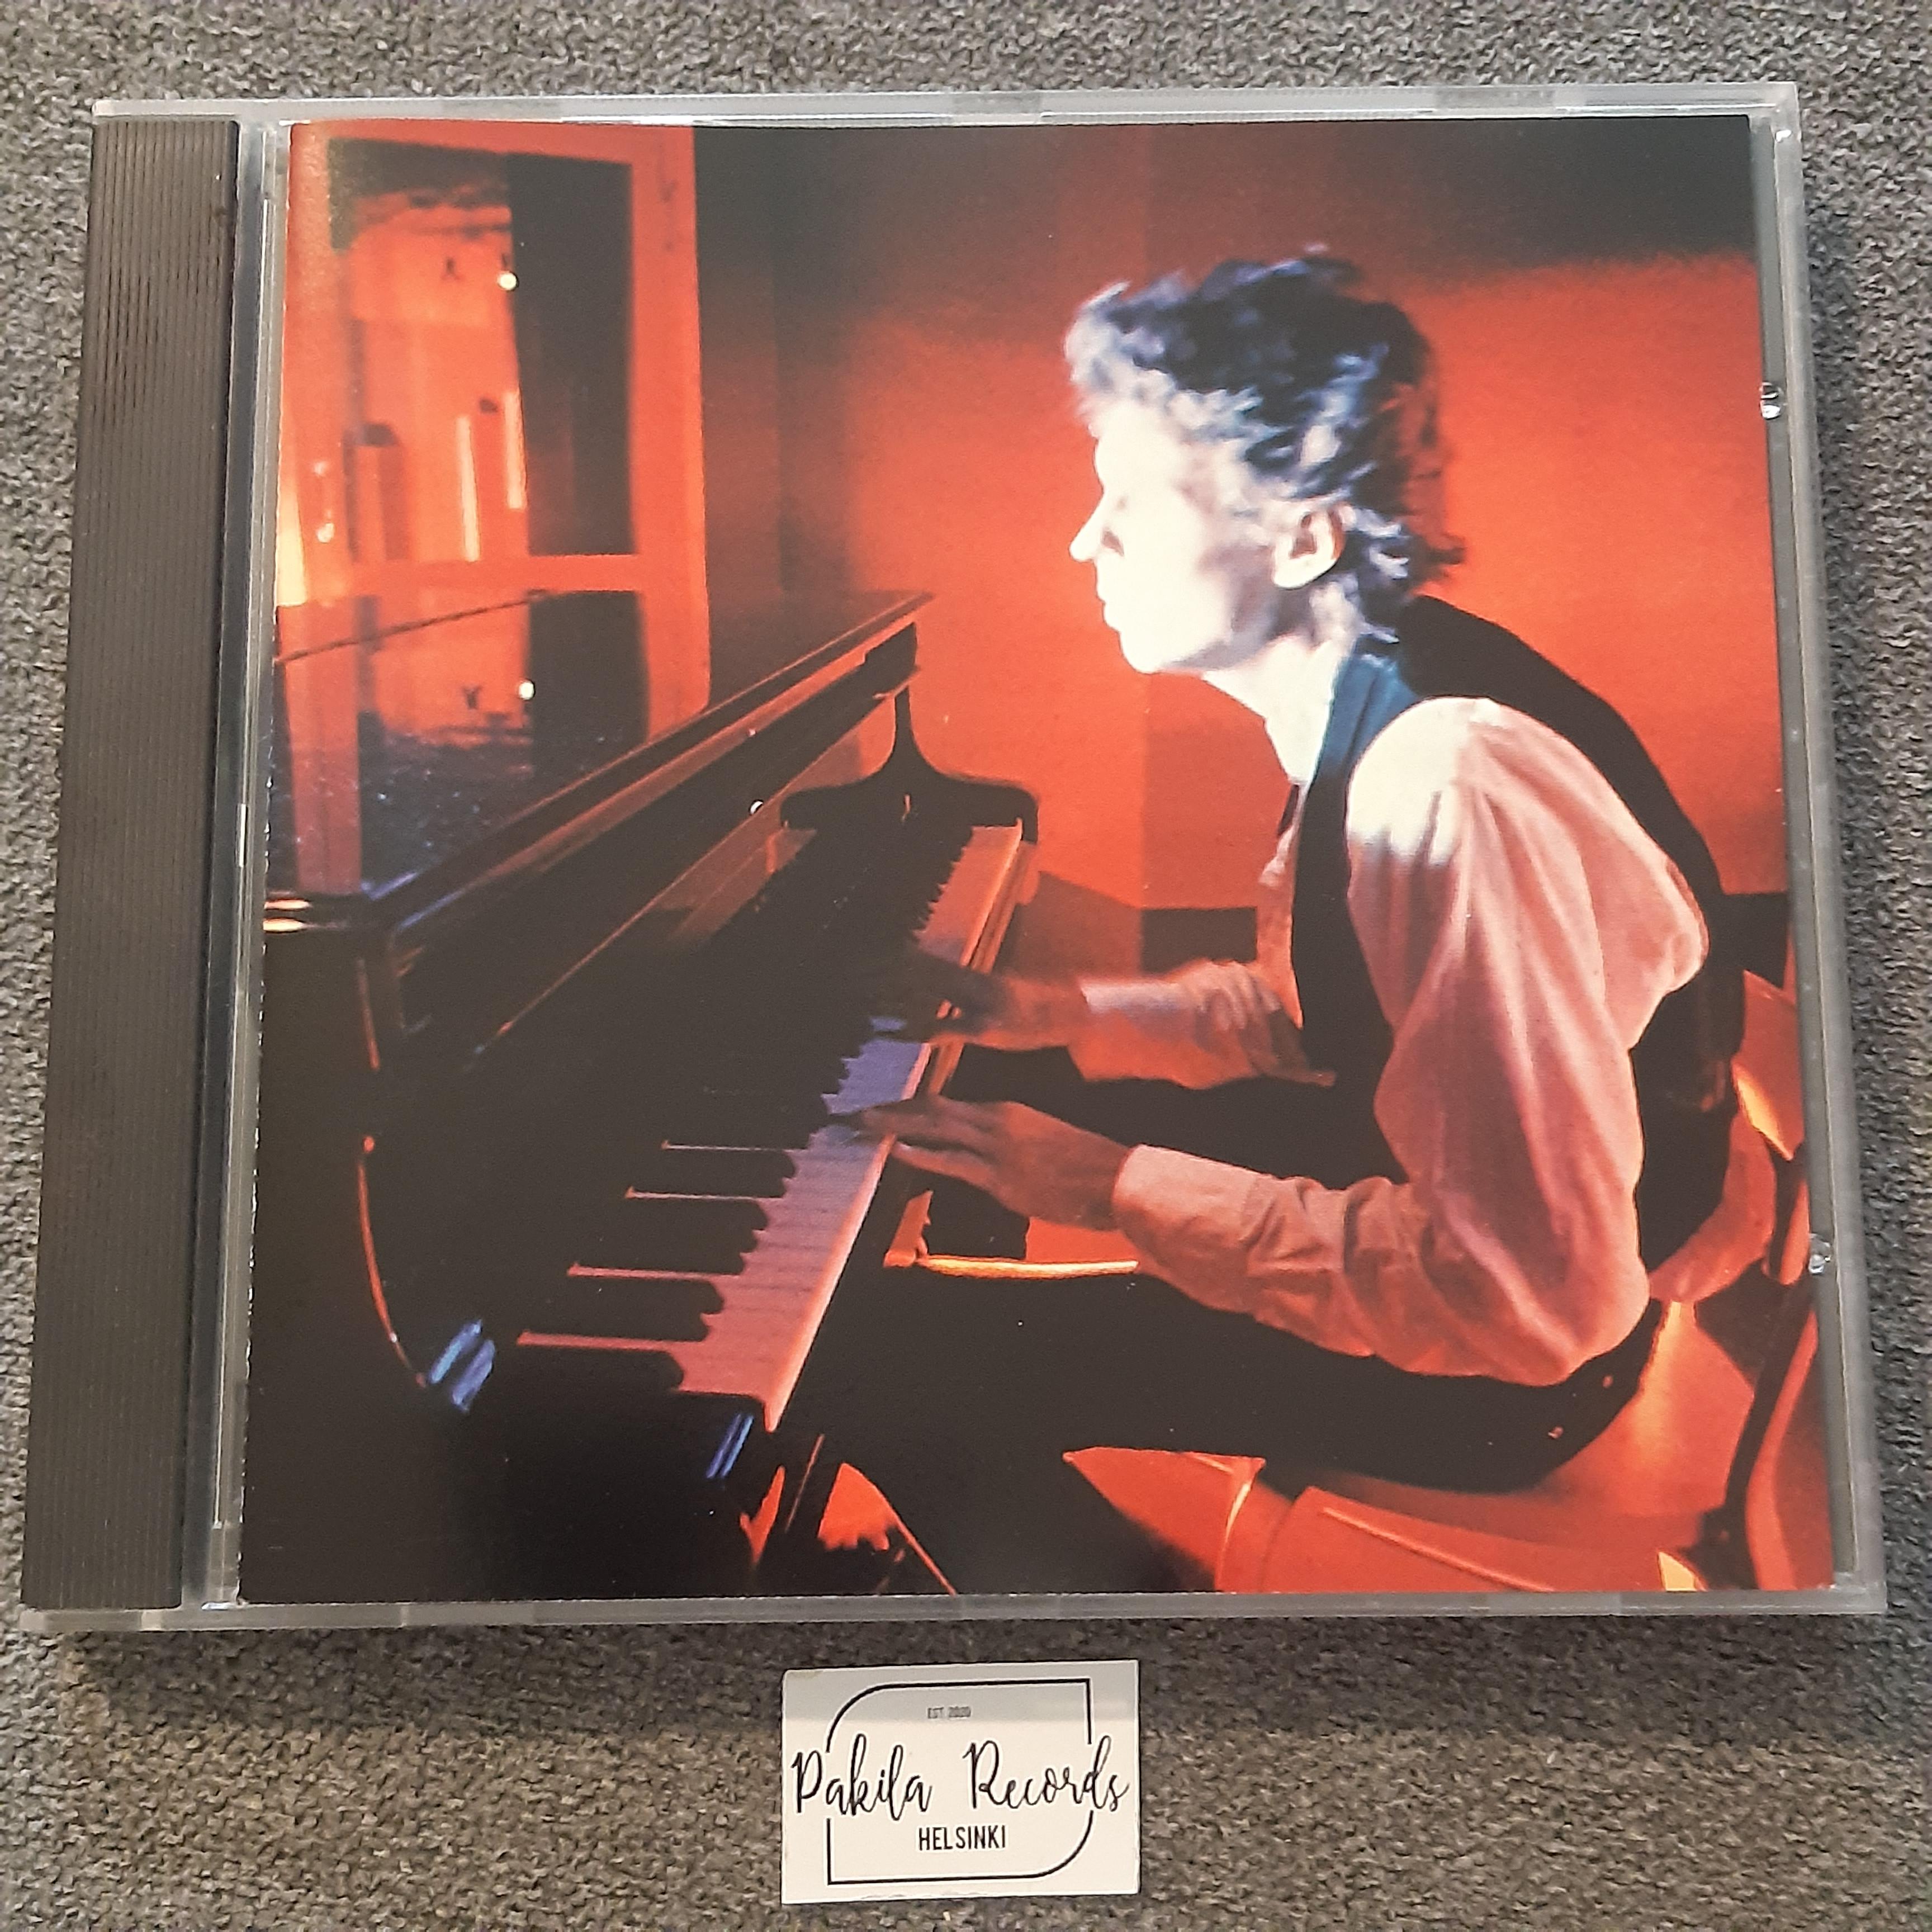 Dave Lindholm - Vanha & uusi romanssi - CD (käytetty)